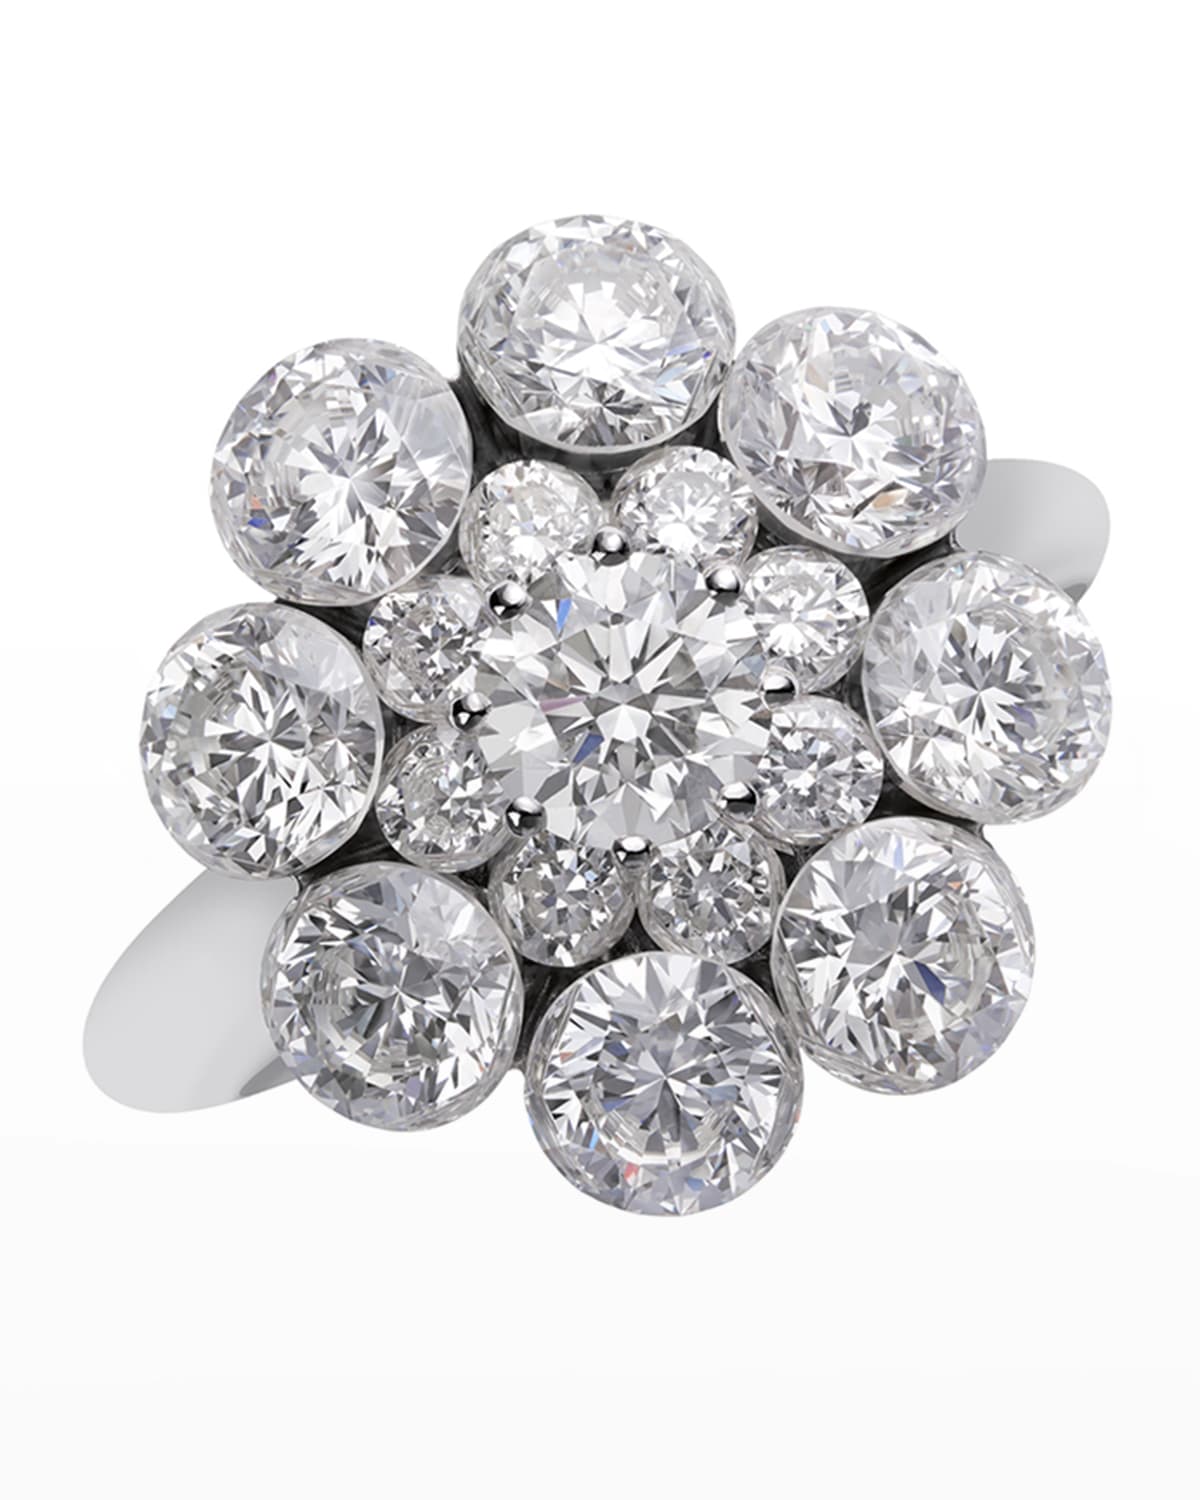 Chopard 18k White Gold Diamond Magical Setting Ring, Size 52